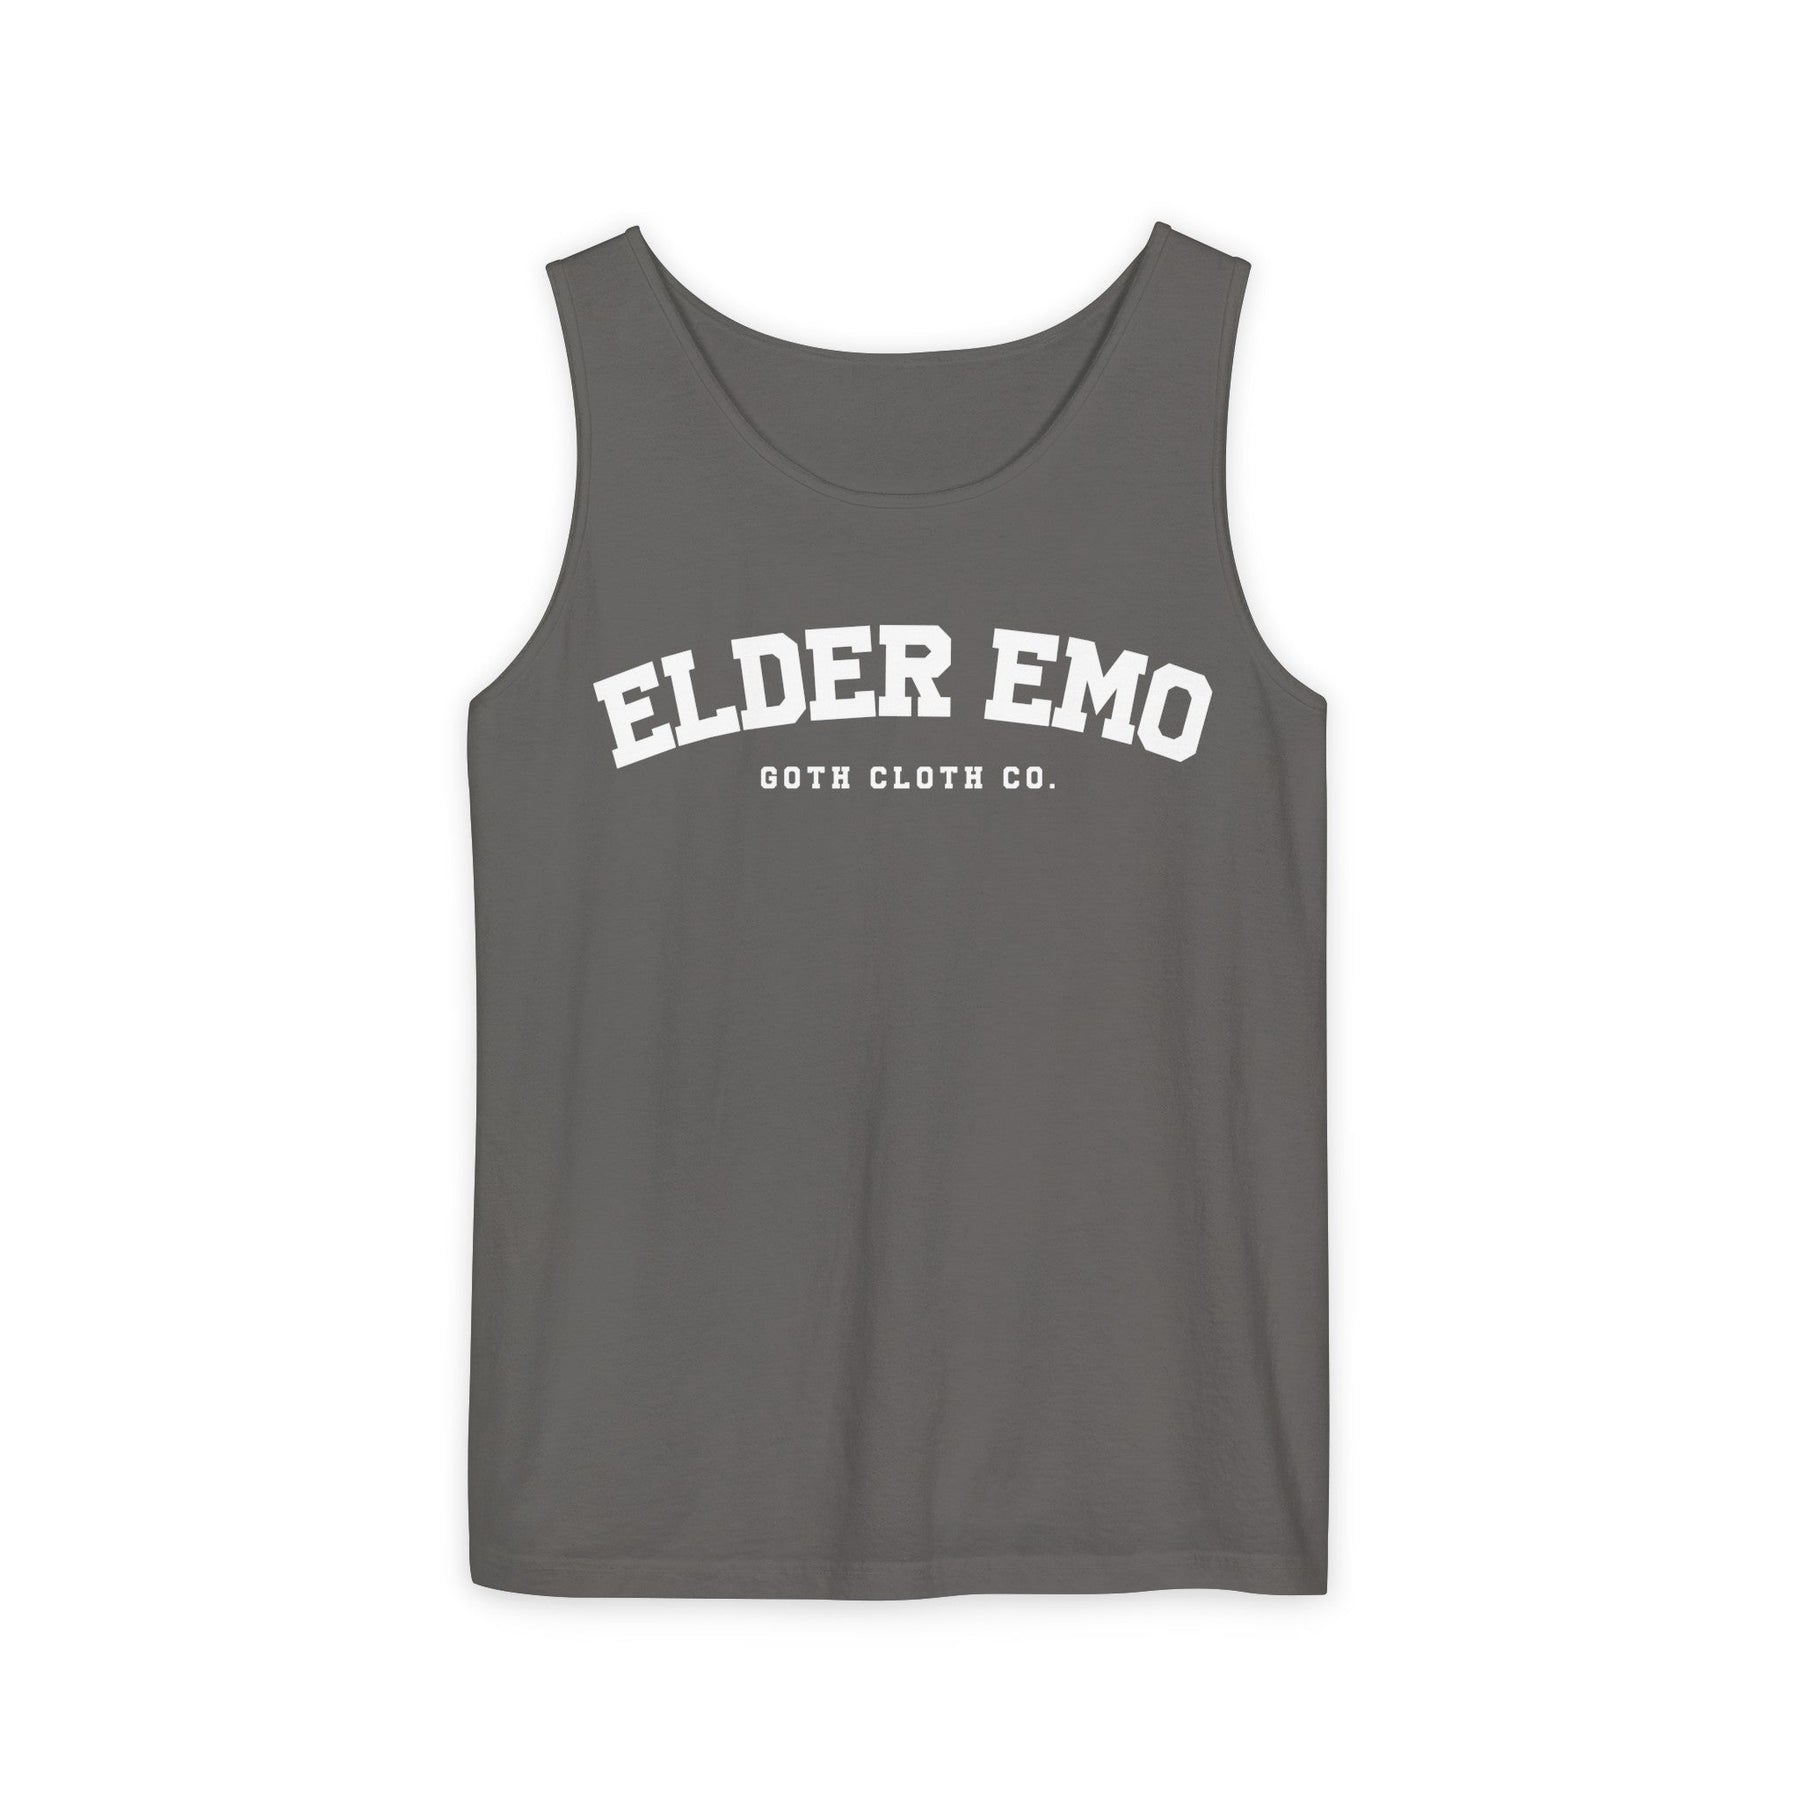 Elder Emo College Unisex Tank Top - Goth Cloth Co.Tank Top19526792230202076742